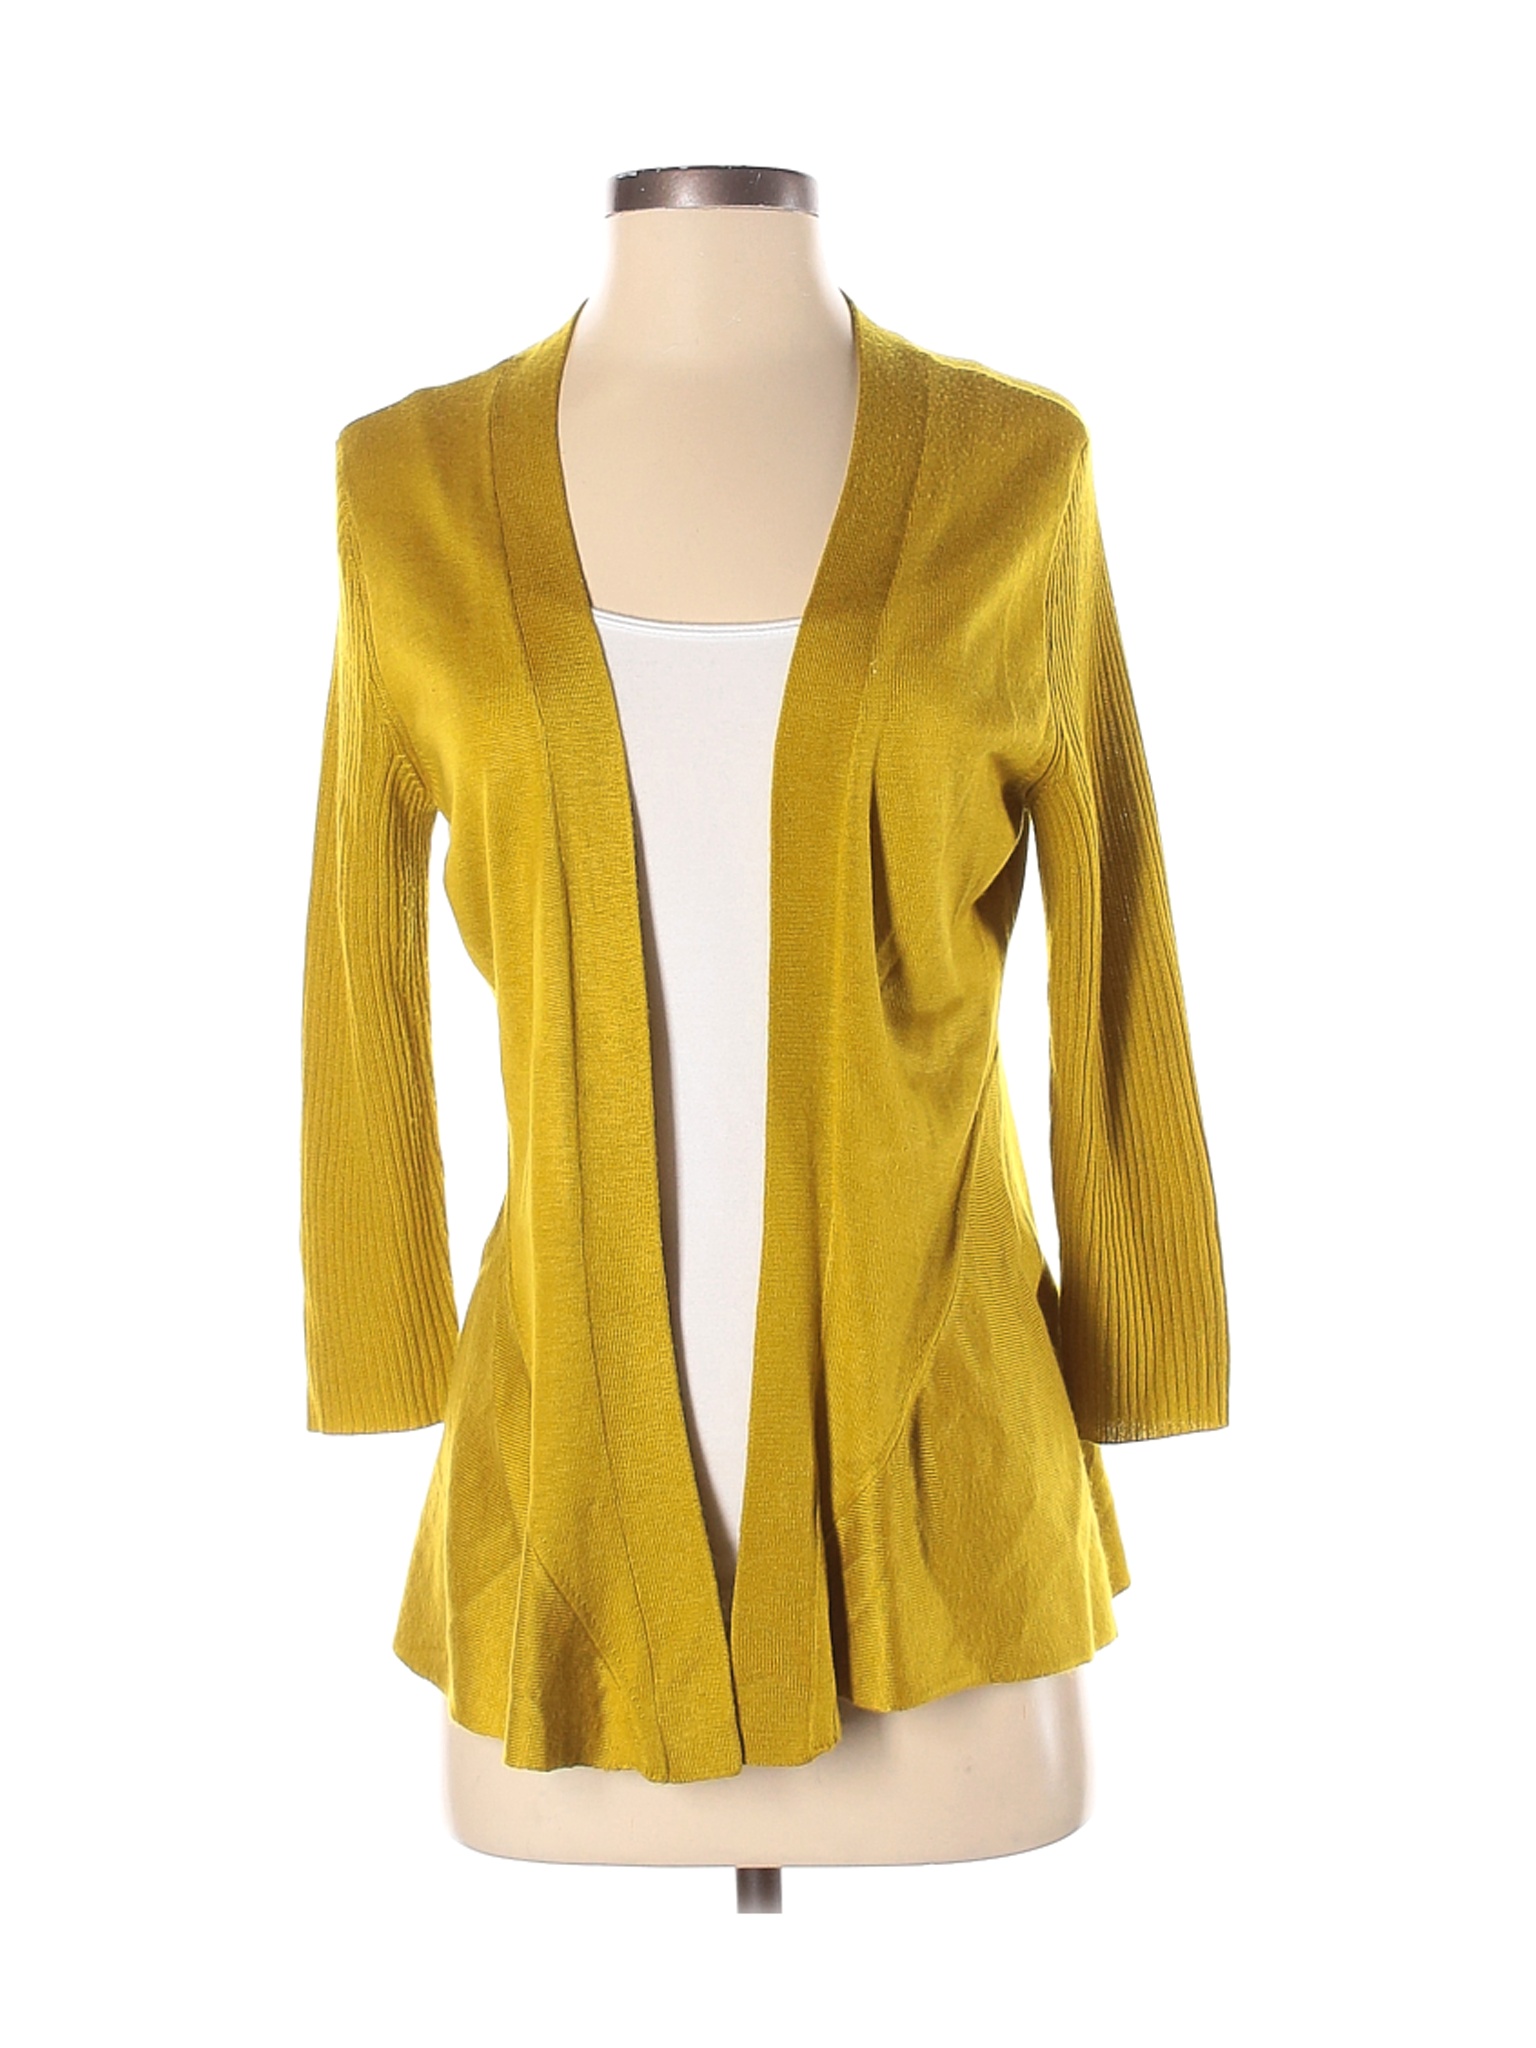 New York & Company Women Yellow Cardigan S | eBay